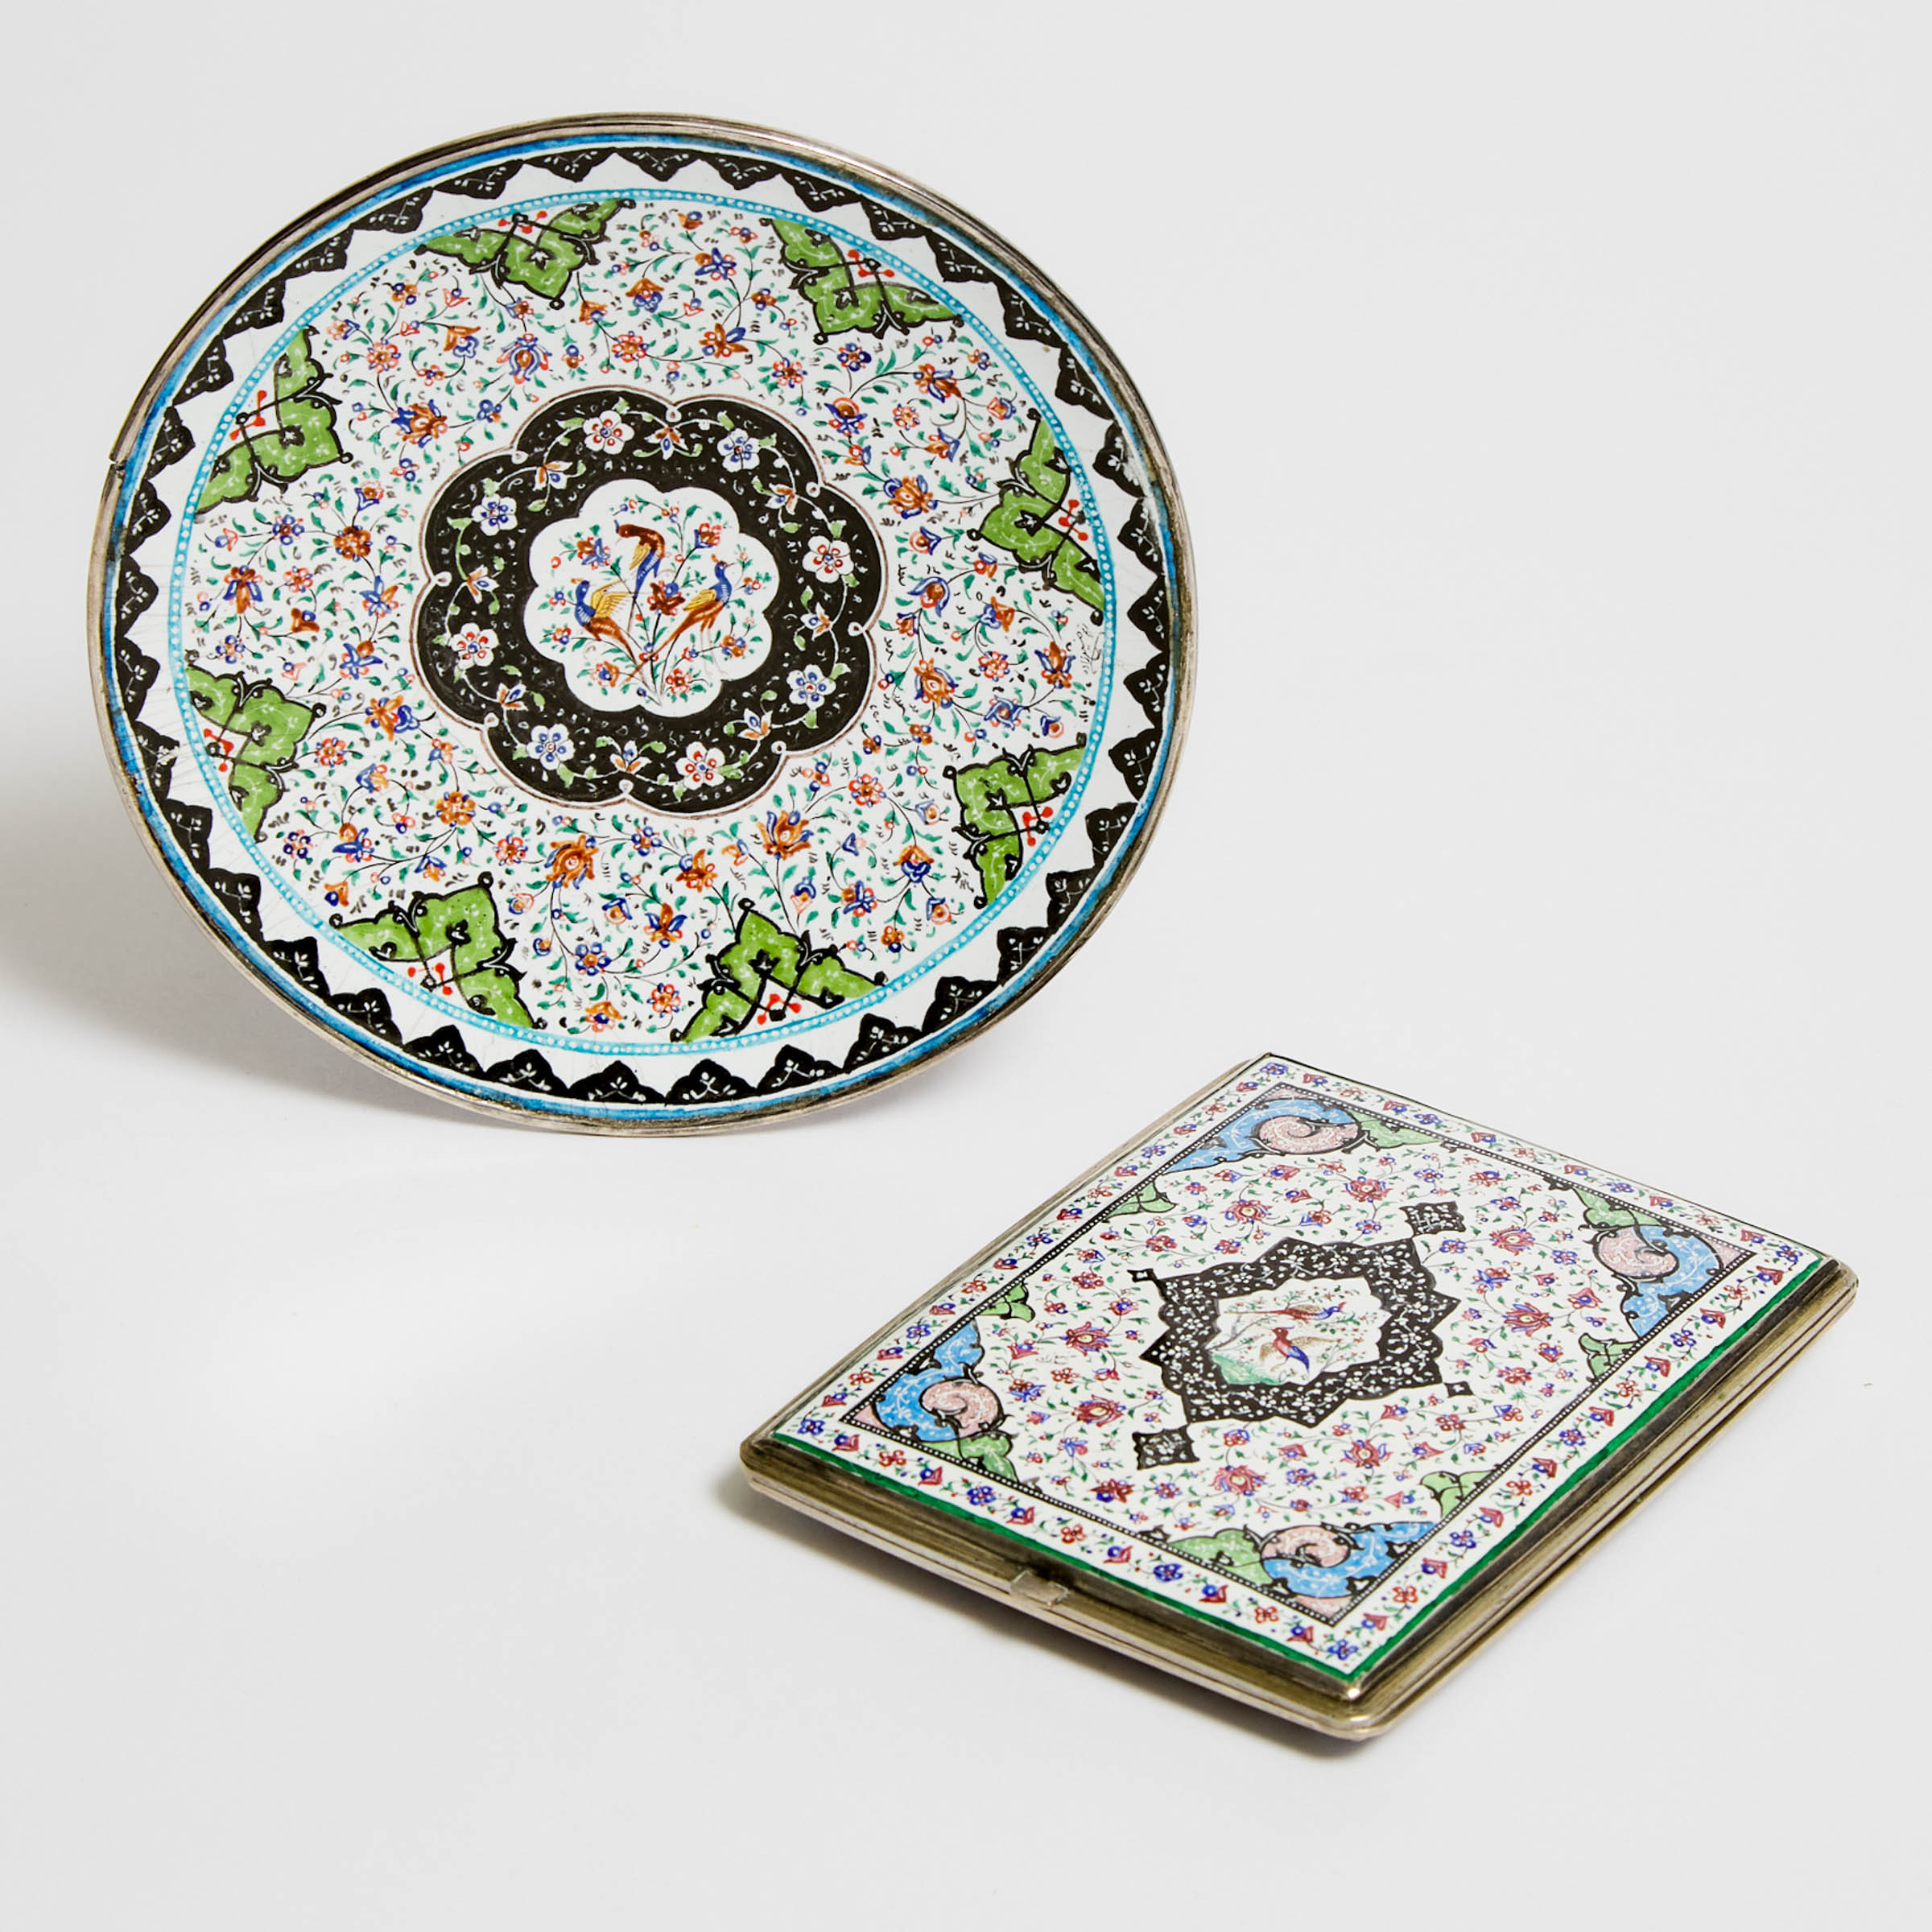 A Persian Cloisonné Enamel Card